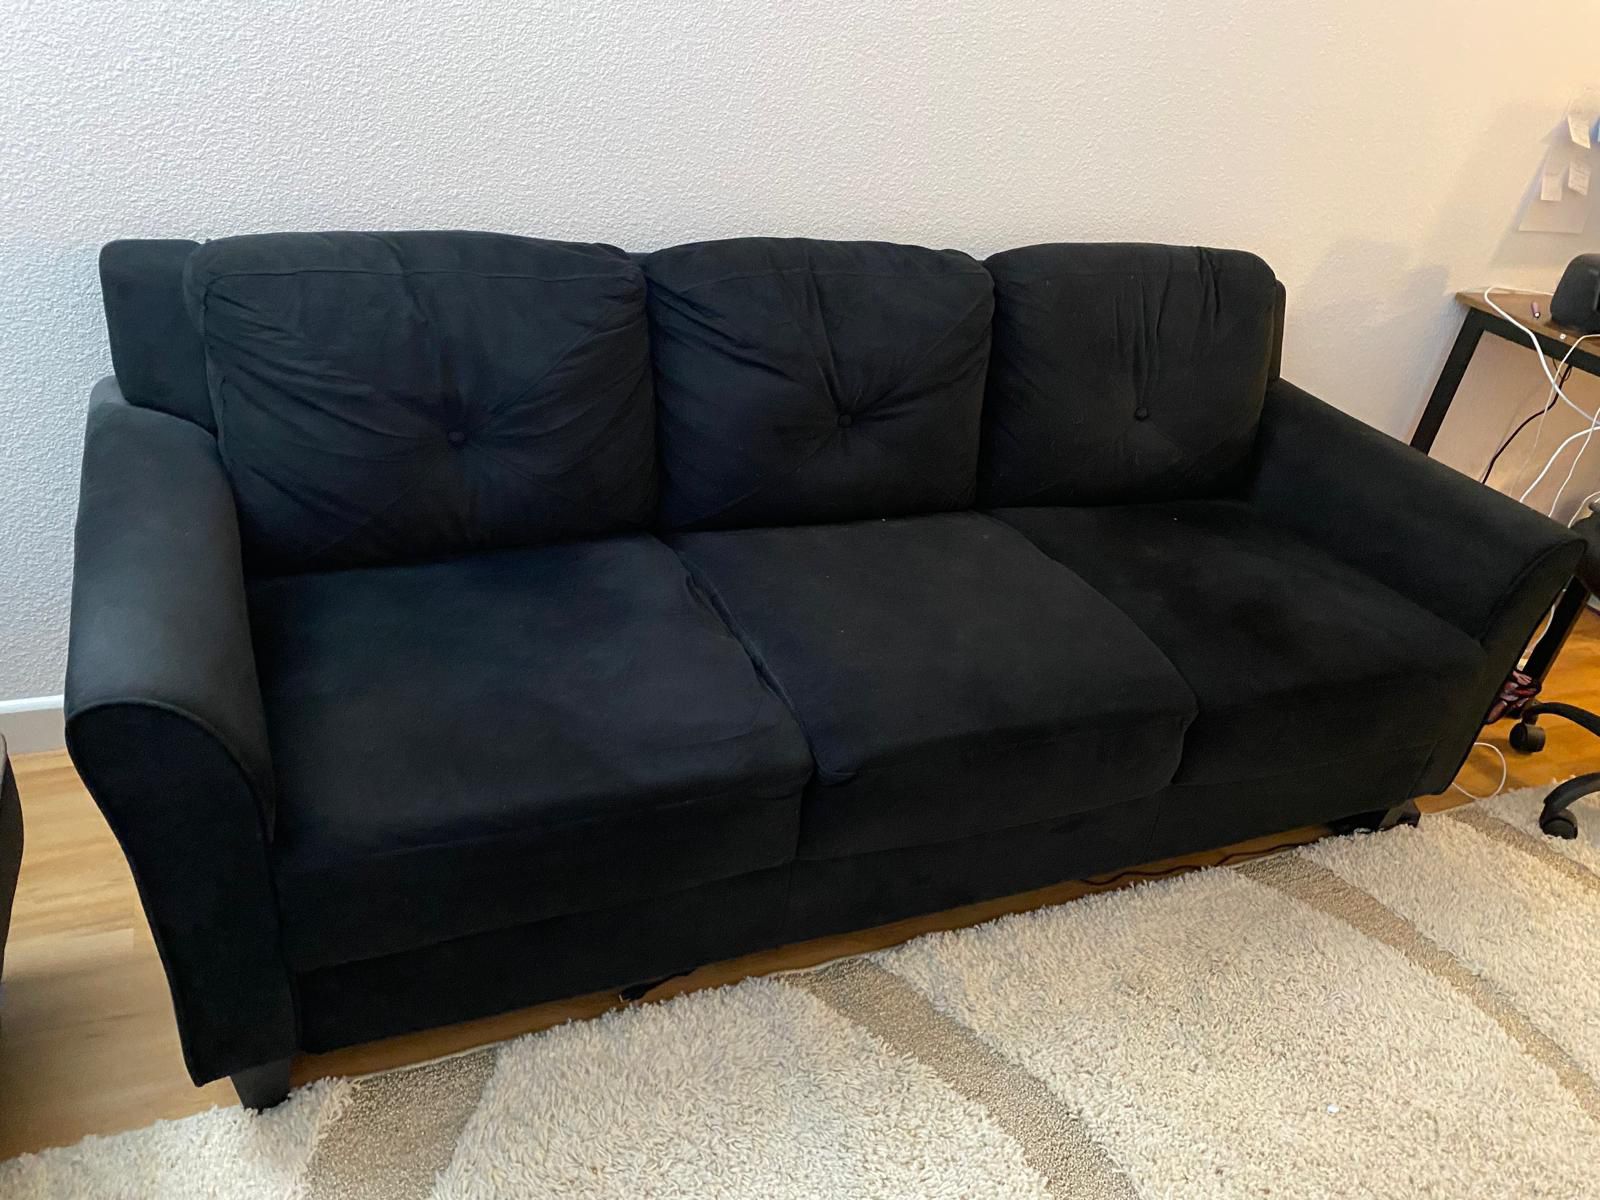 Black Sofa for Sale 